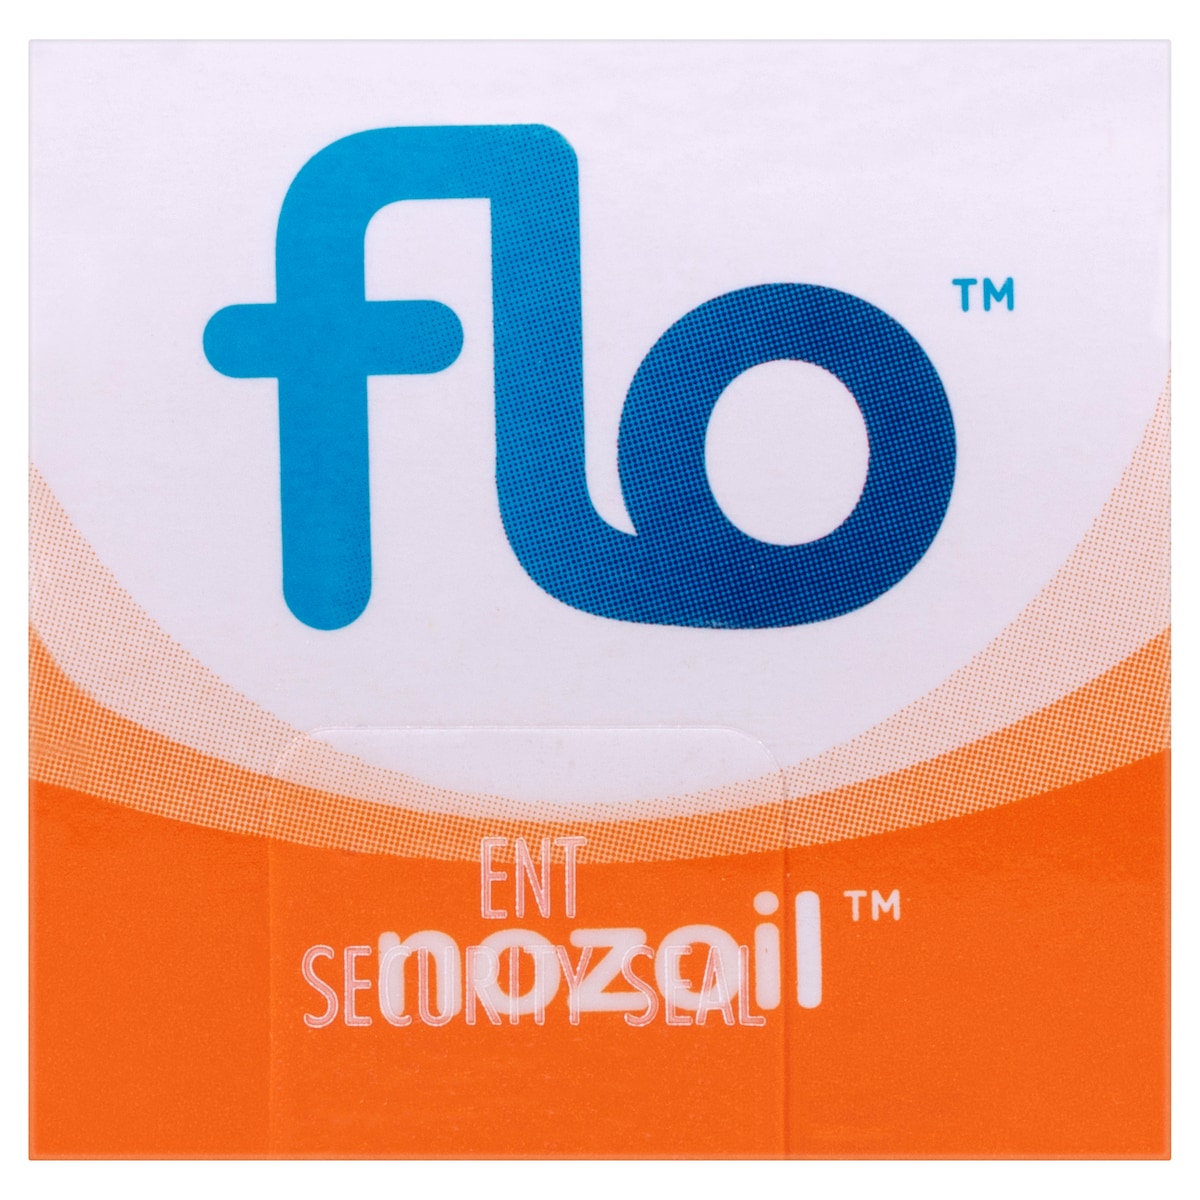 Flo Nozoil S/Seed Oil Spr 15Ml